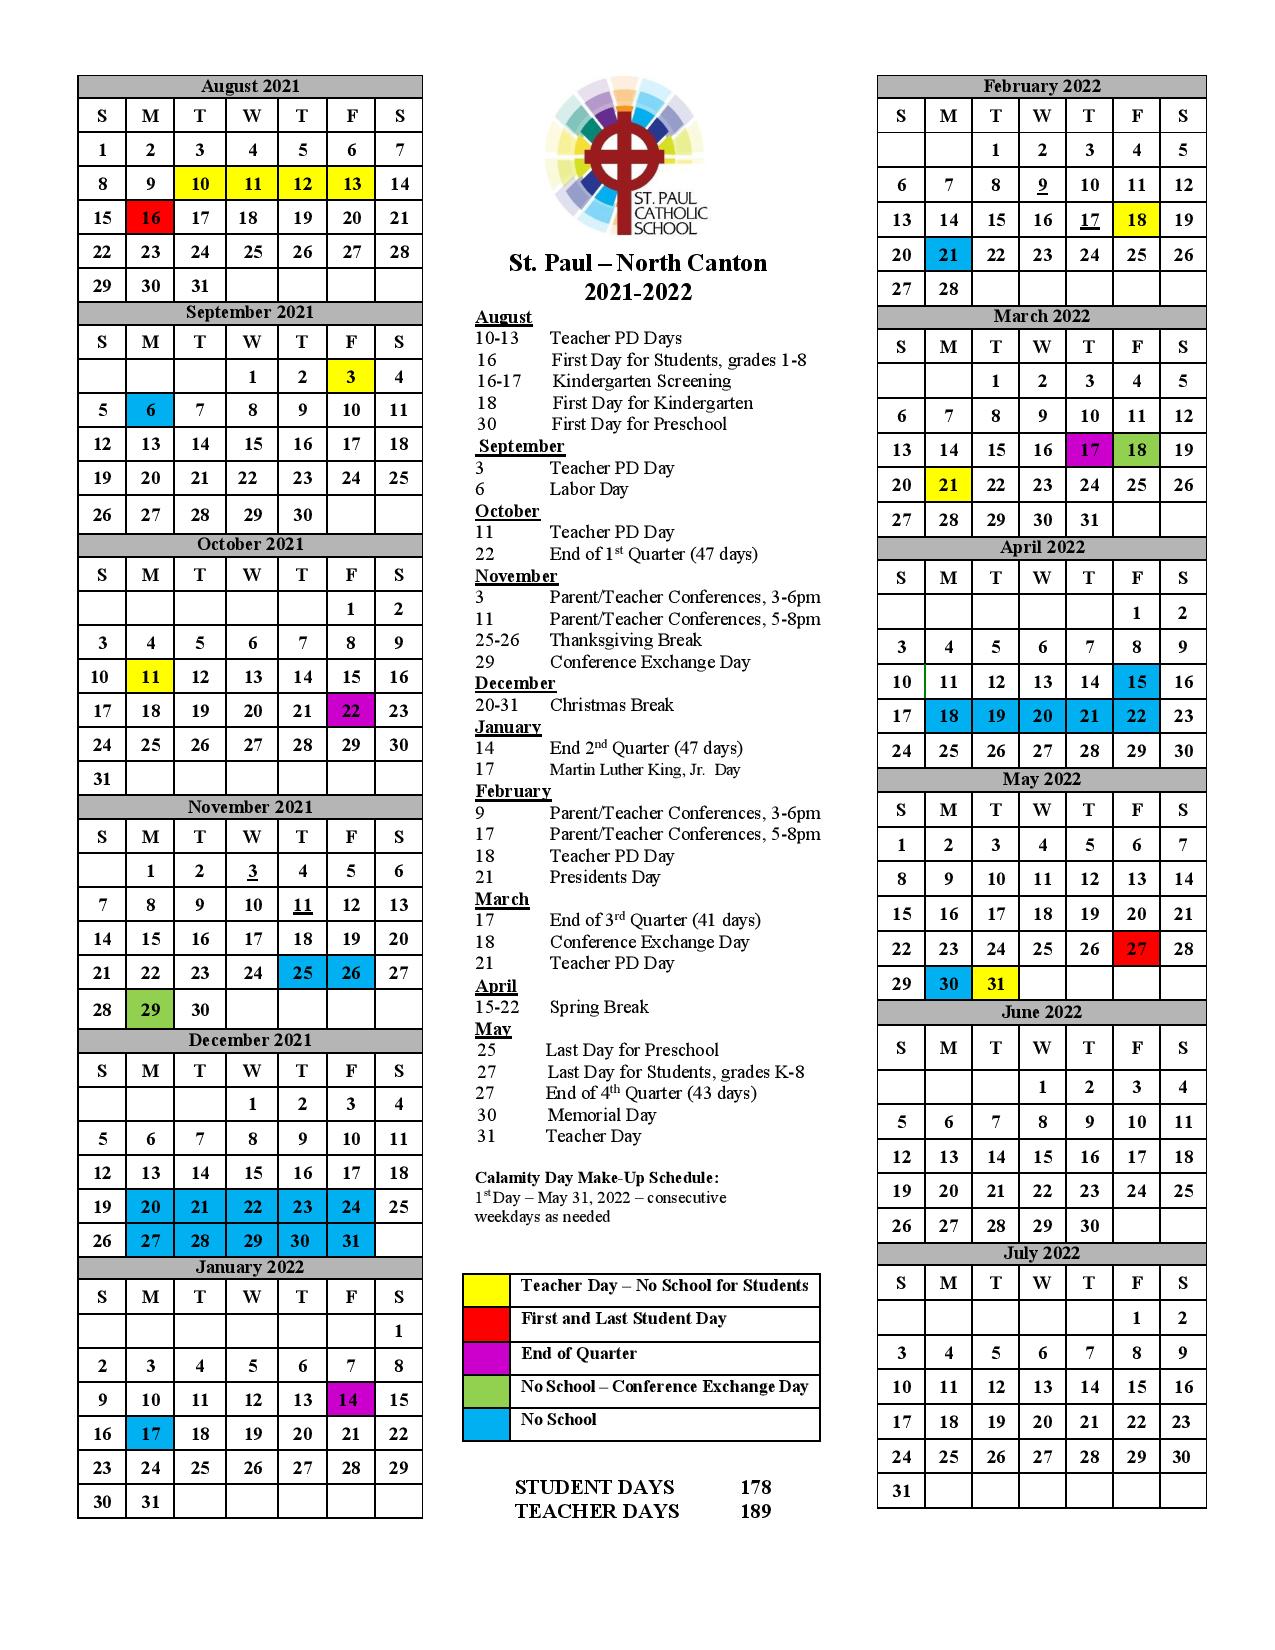 Sps Calendar 2022 Academic Calendar 2021-22